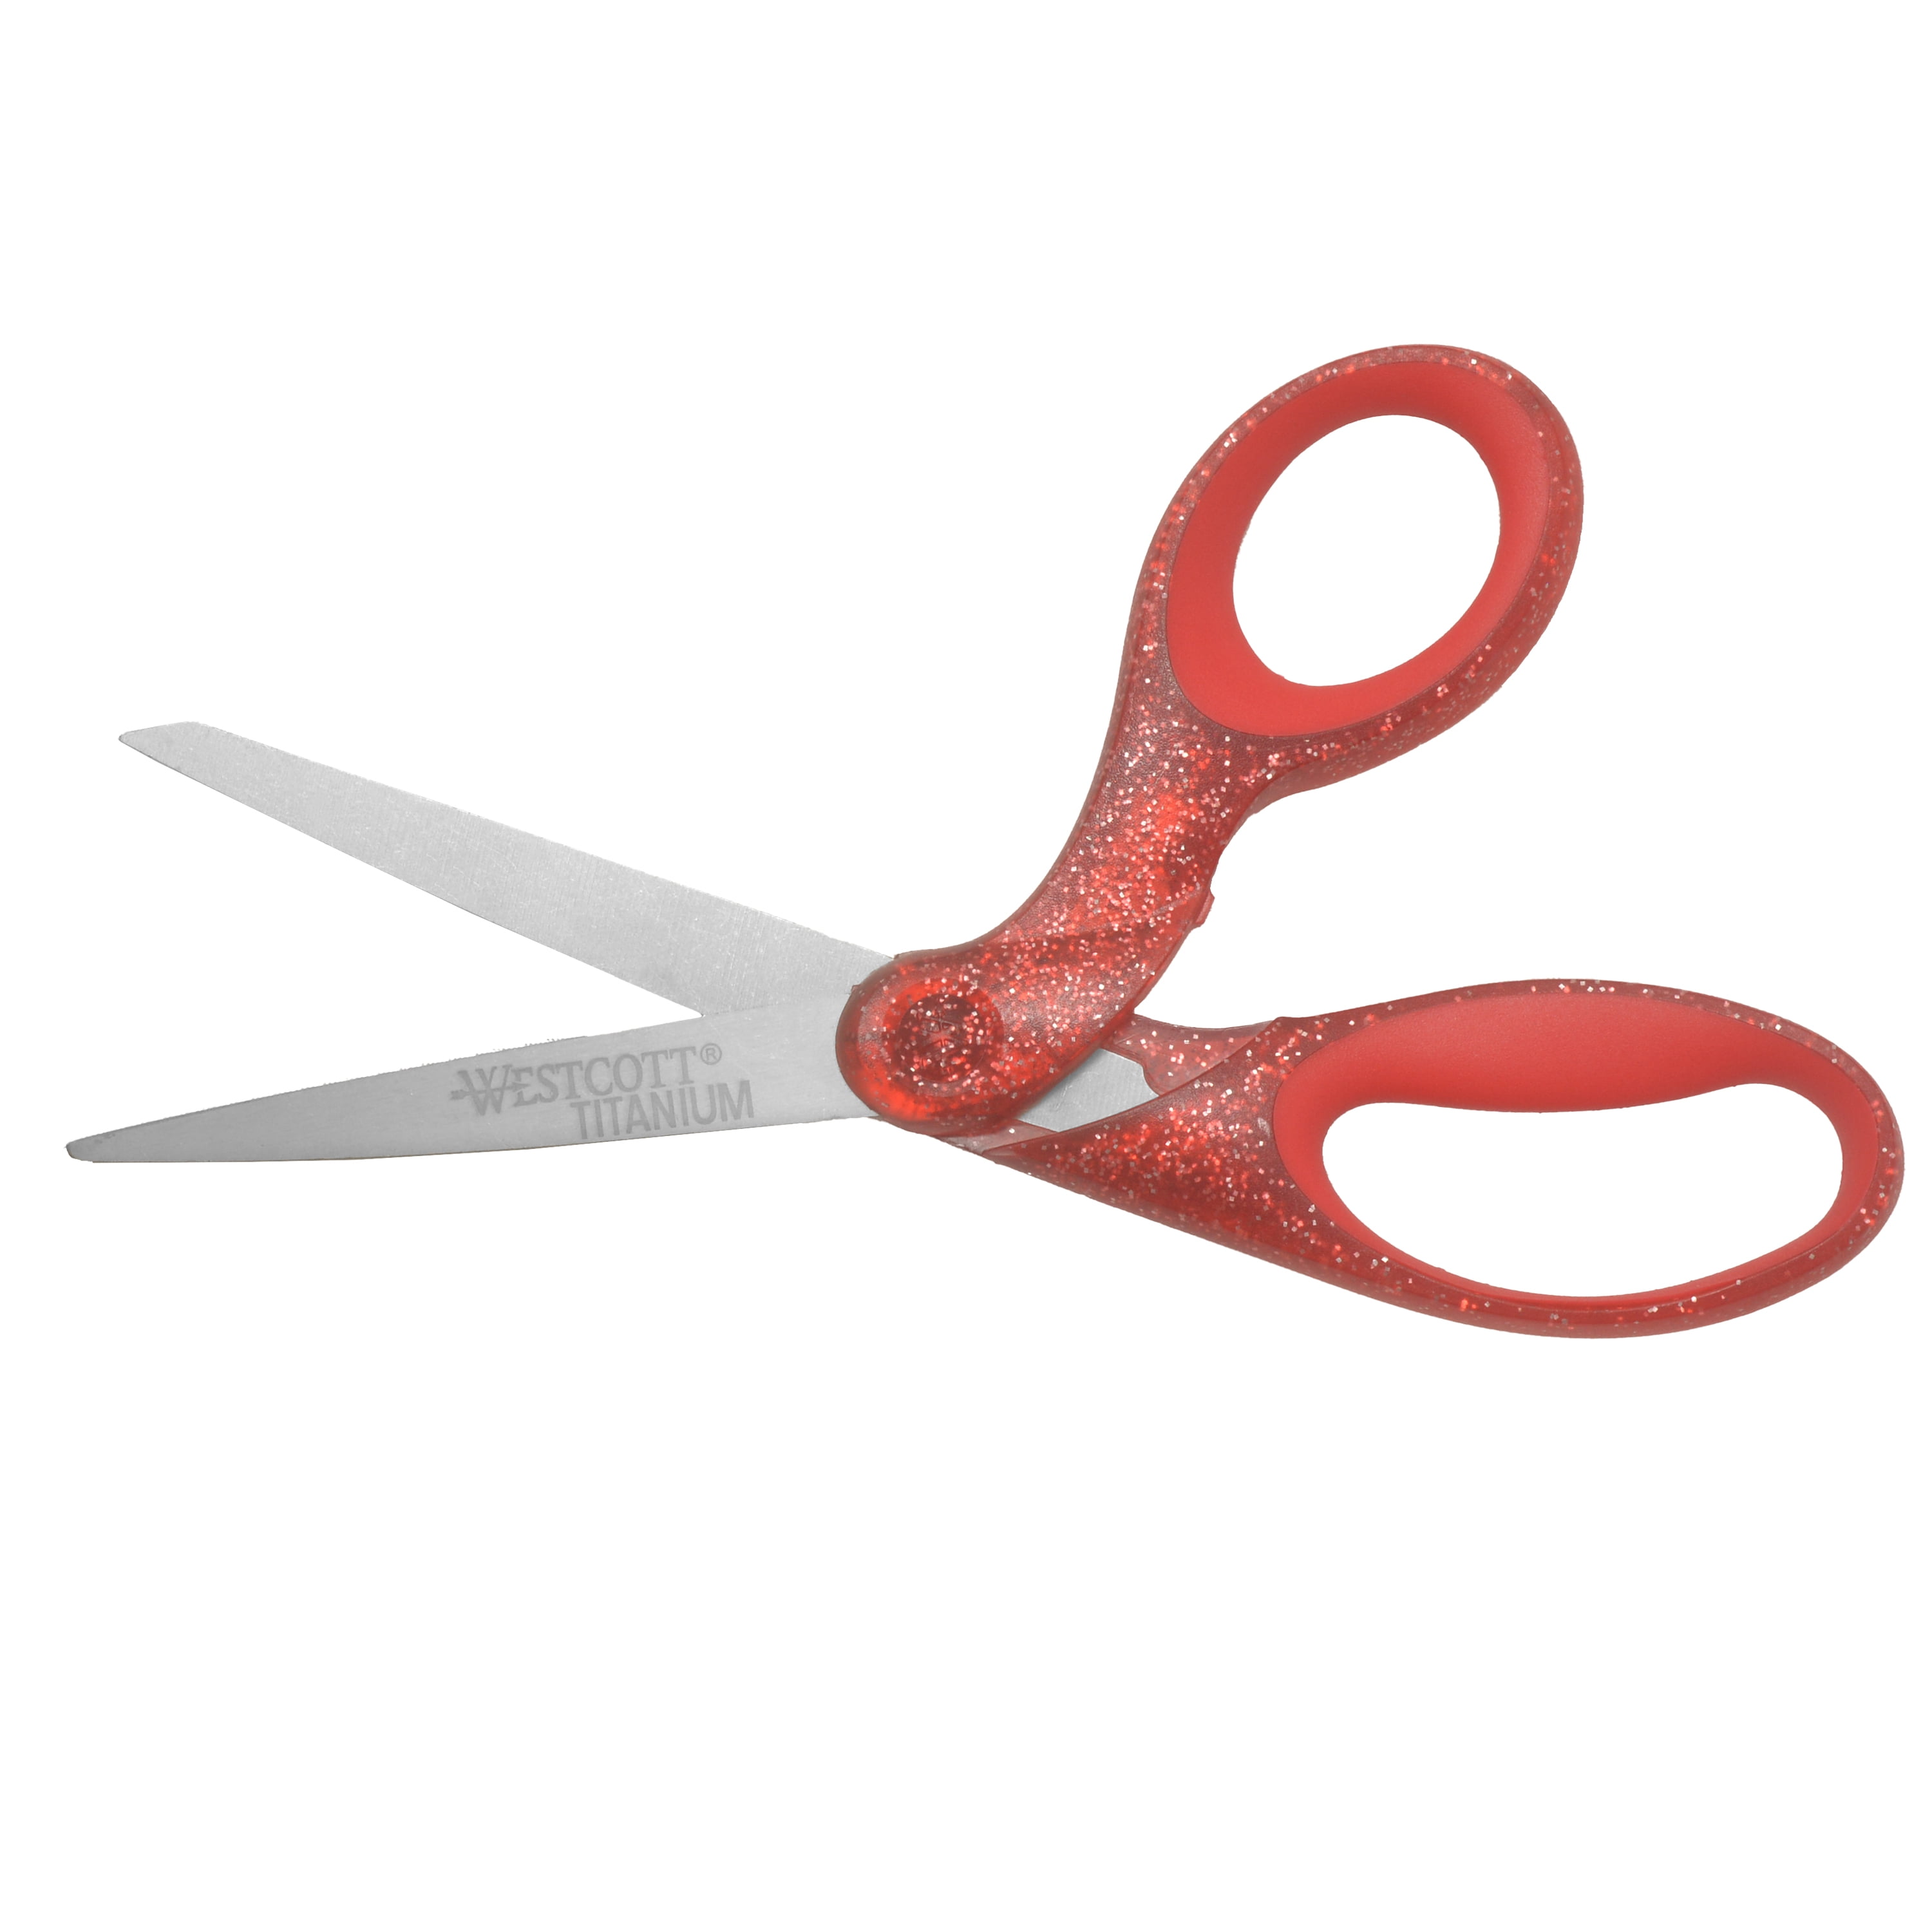 Buy Westcott Value Red 8 Bent Stainless Steel Scissors (ACM10703)